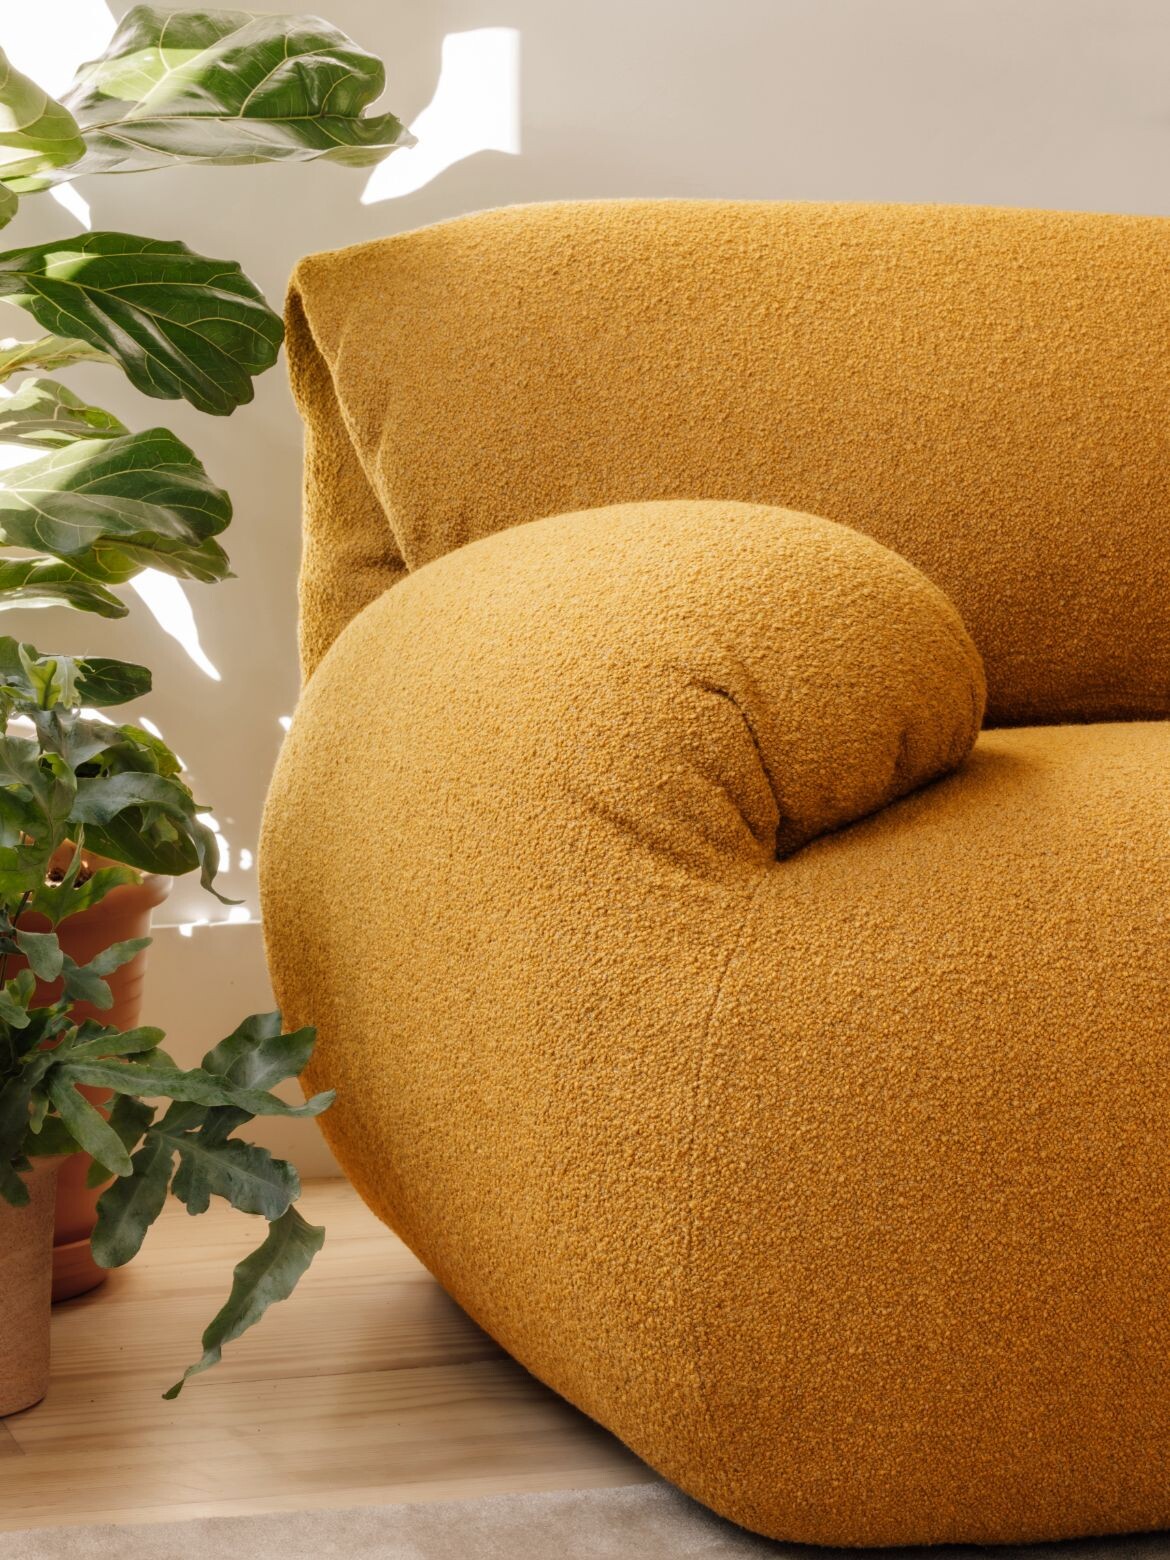 Gabriel Tan - Luva modular sofa and lounge chair